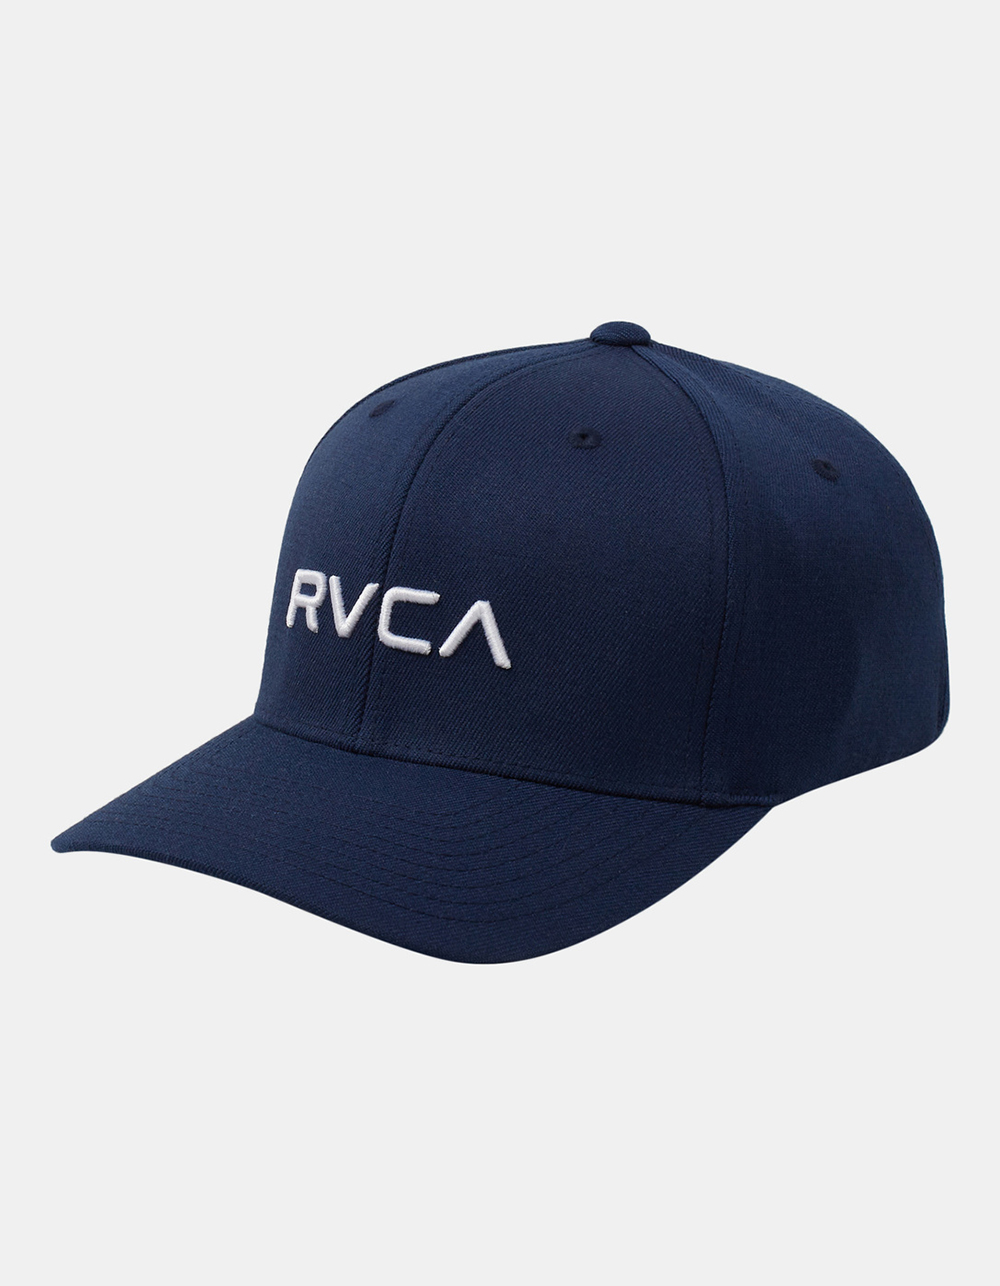 RVCA Mens Tillys NAVY - Flexfit | Hat